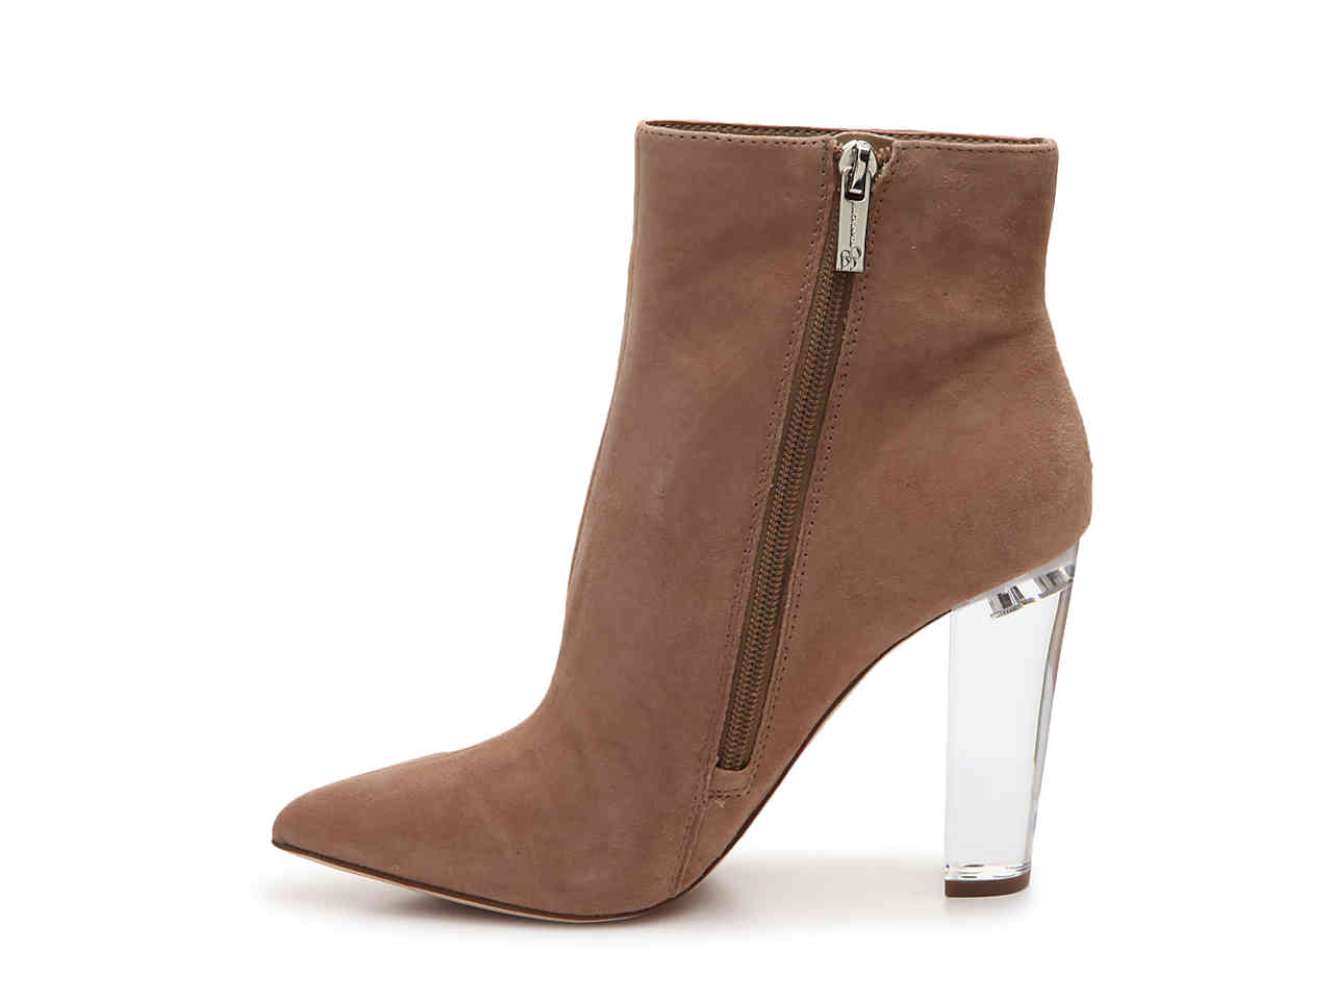 Jessica Simpson Womens teddi Closed Toe Ankle Fashion Boots, Fawny, Size 8.0 t1c | eBay